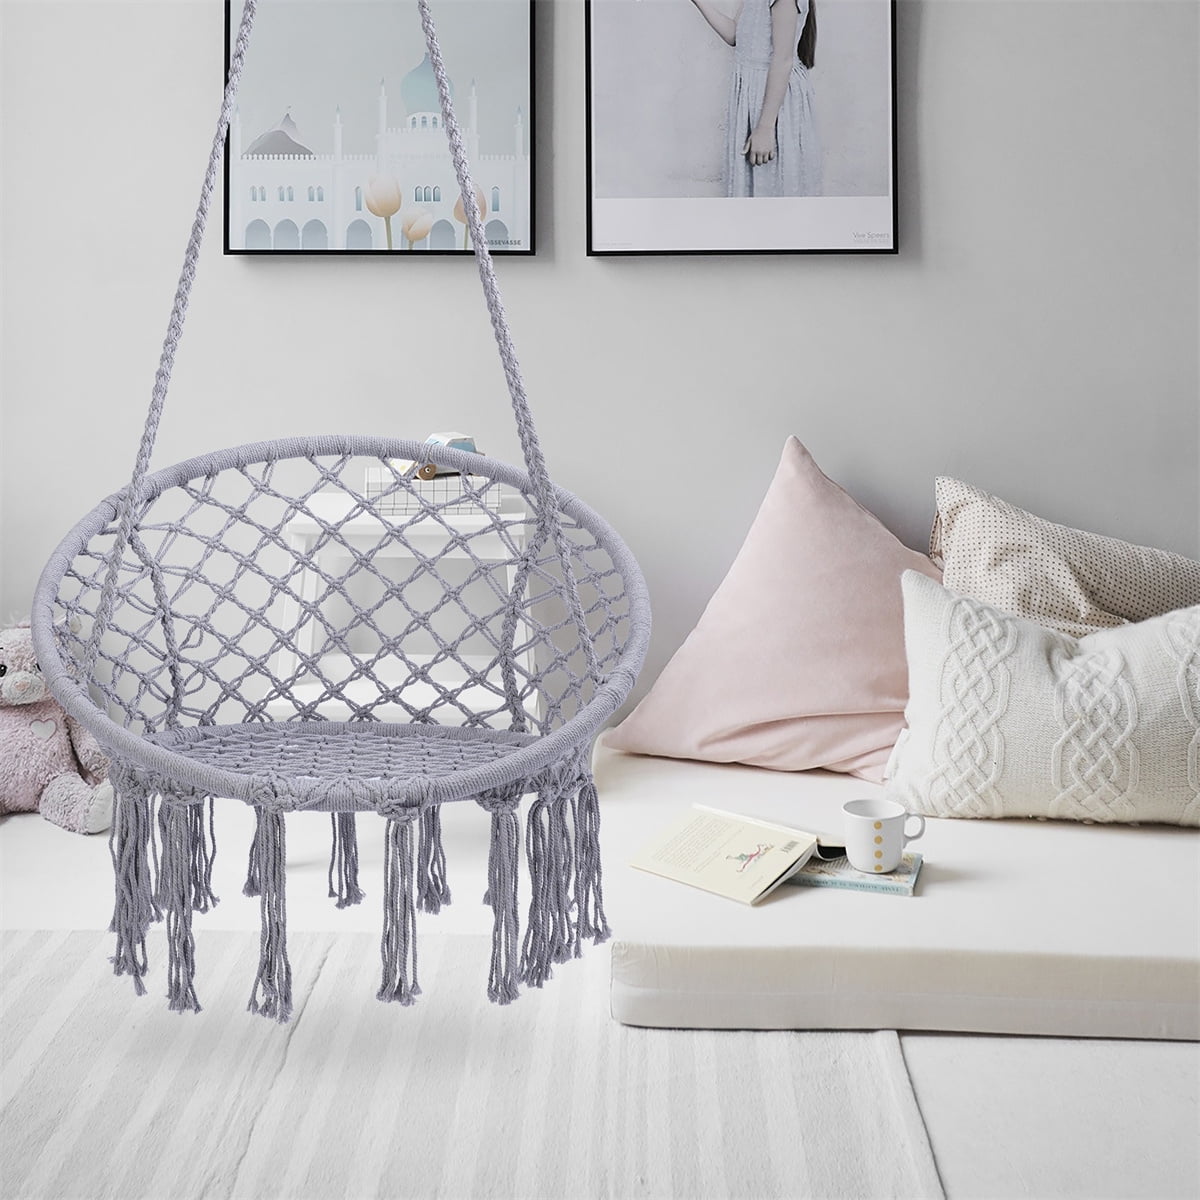 Hammock Chair Macrame Swing with Cushion & Hanging Hardware Kits Rope Gray 